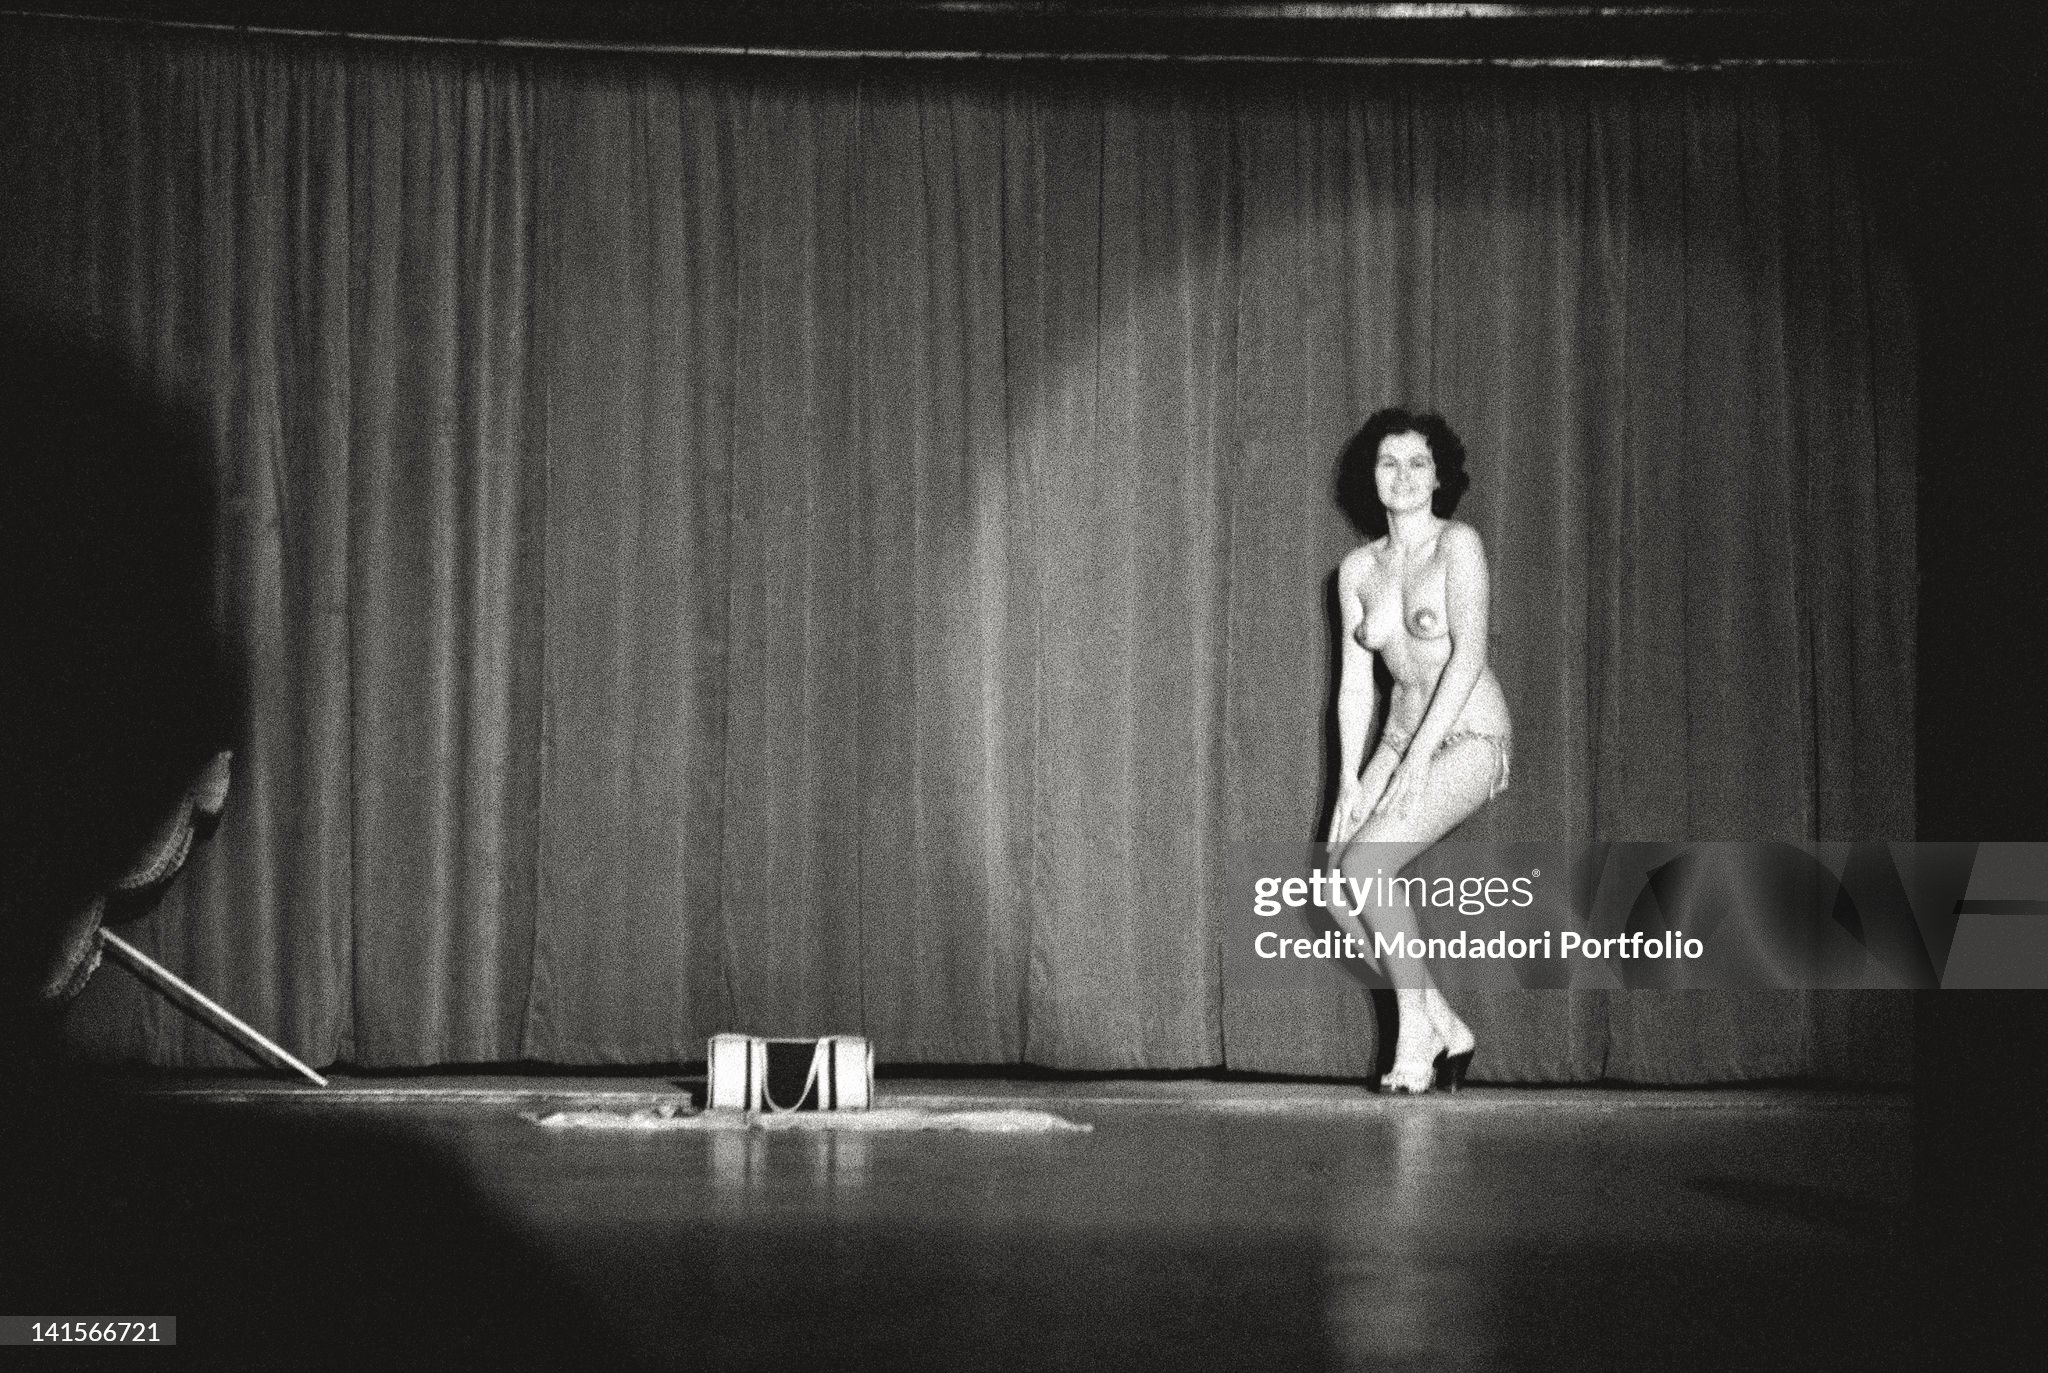 Stripteaser ending her performance in a nightclub in Milan in 1960s.